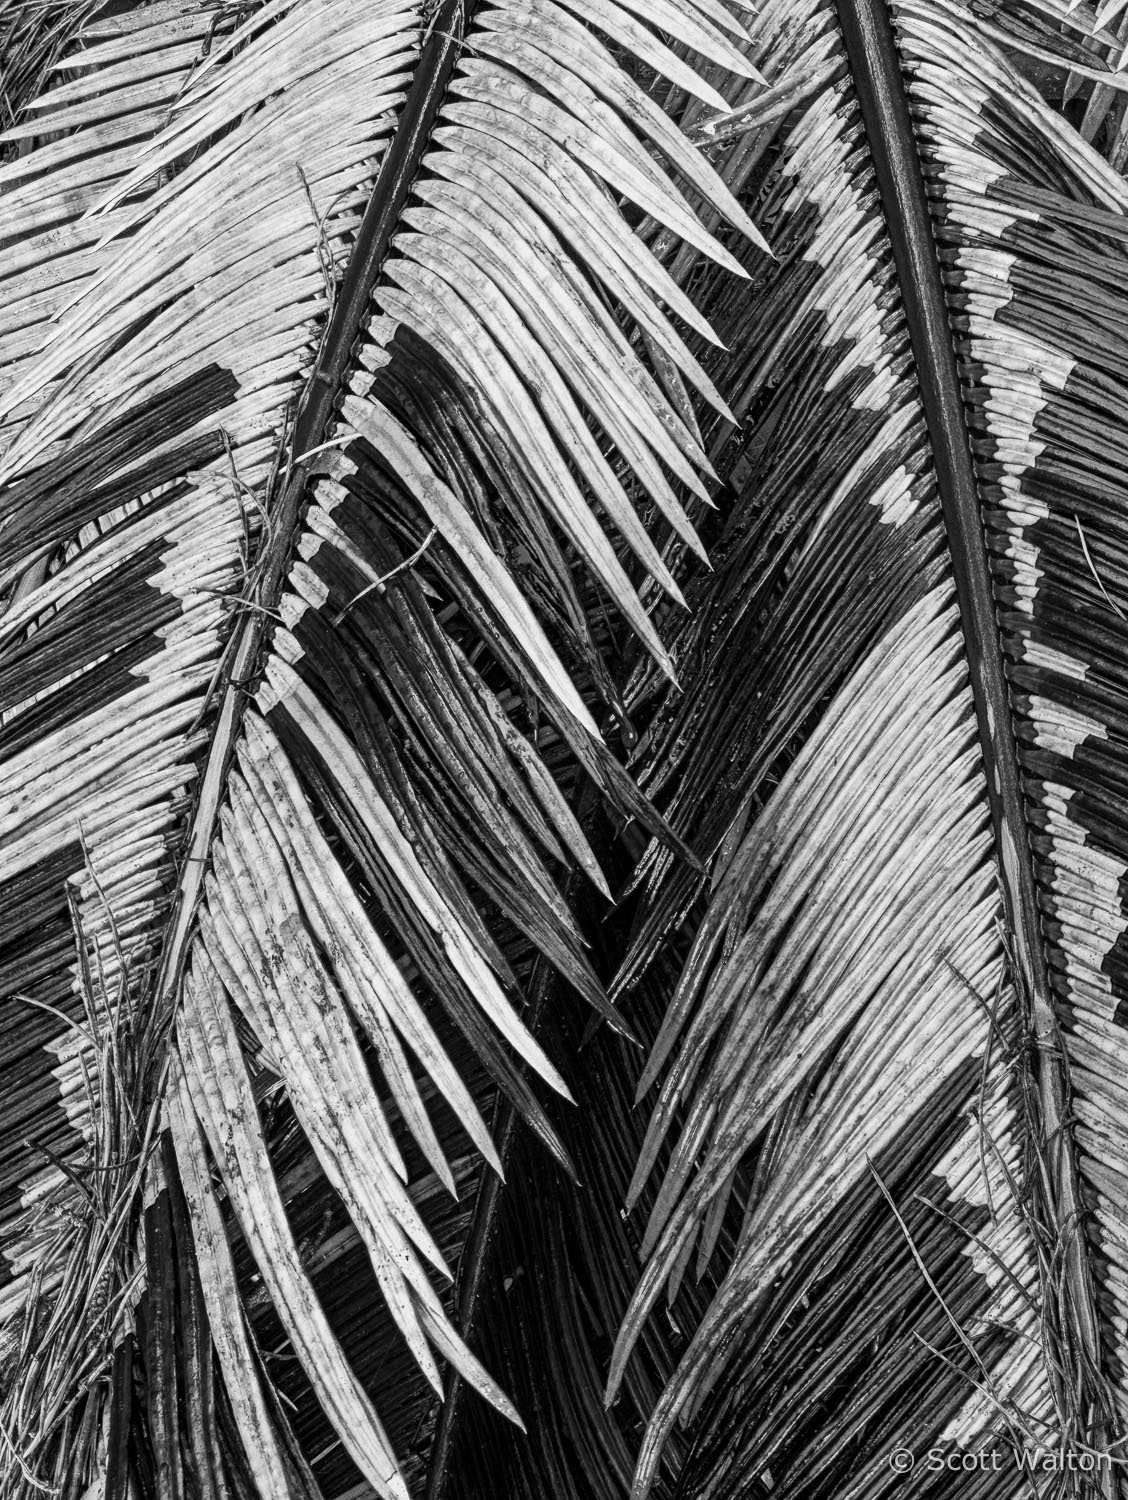 king-sego-palm-leaves-niceville-florida.jpg